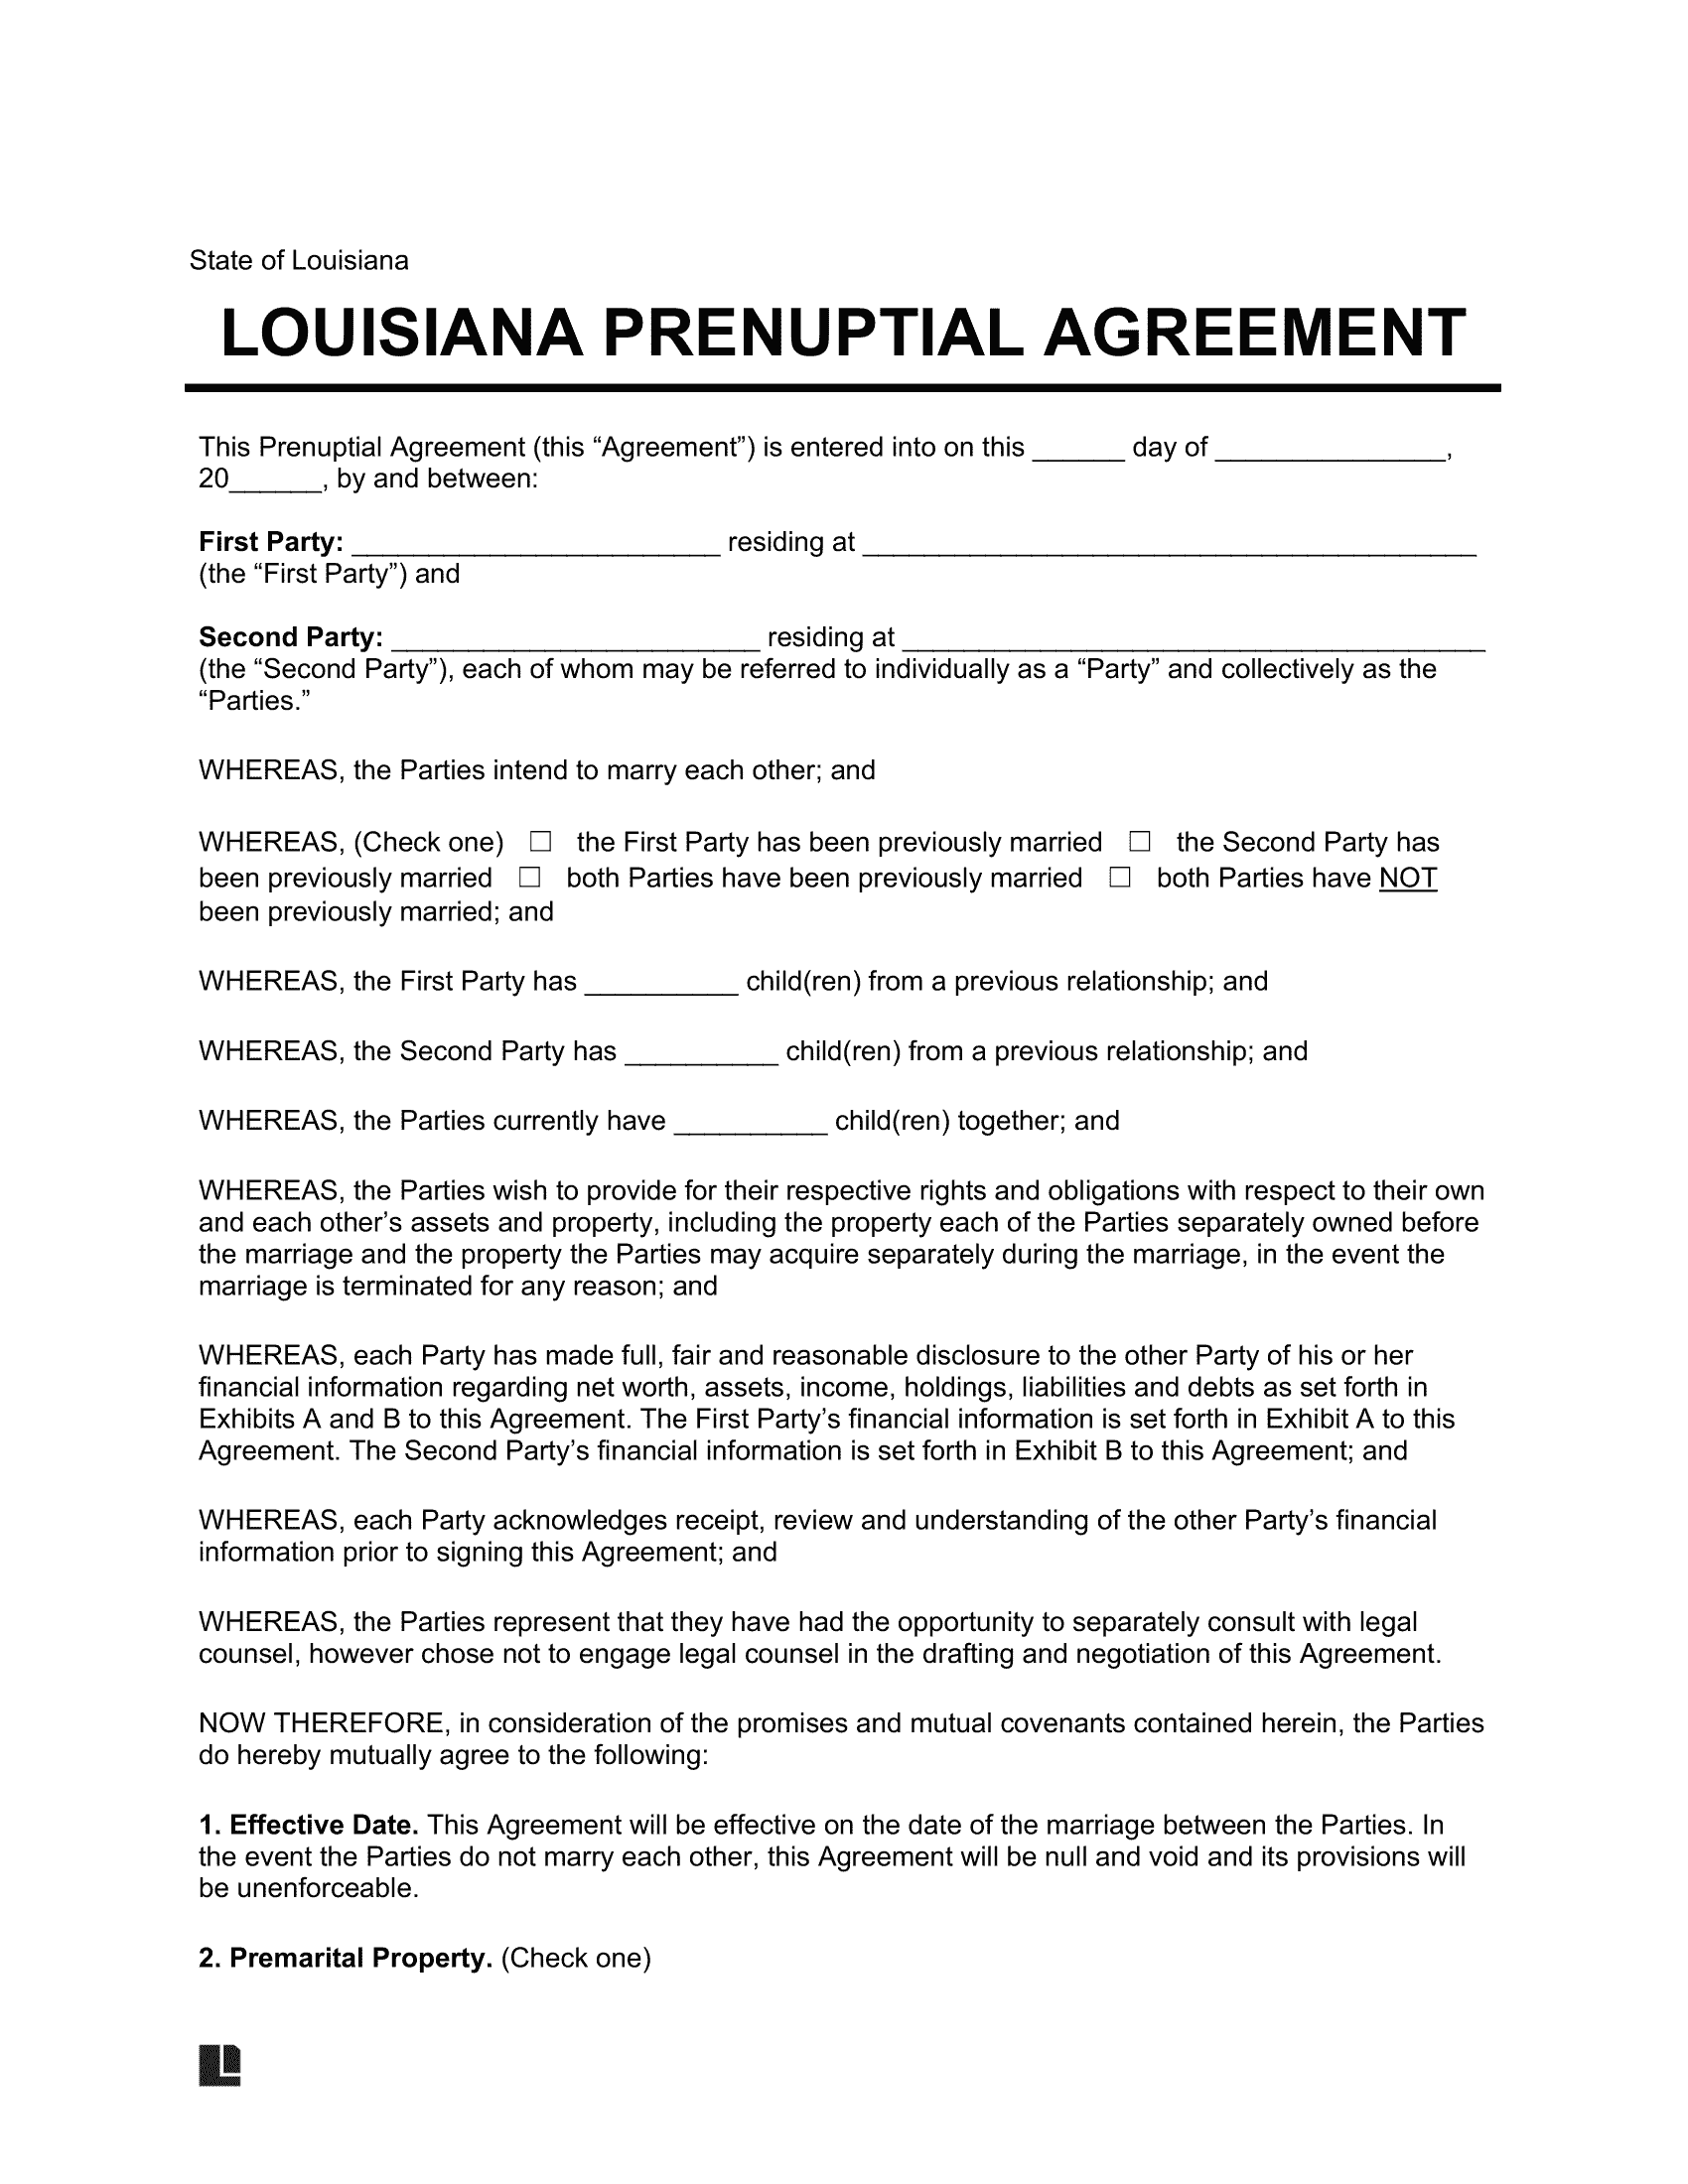 Louisiana Prenuptial Agreement Template